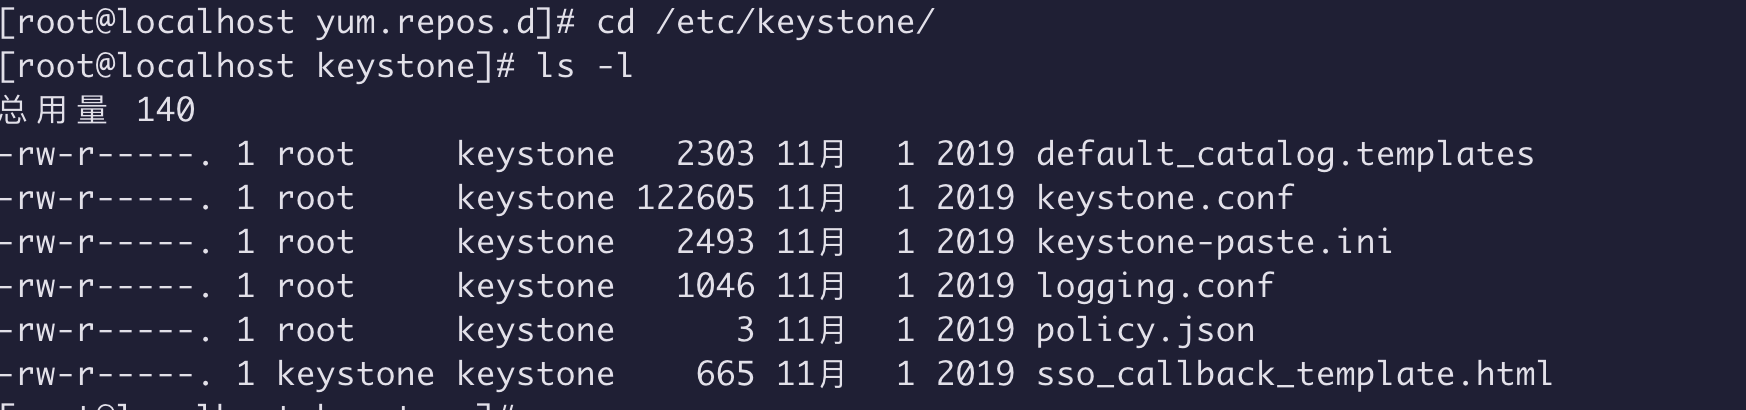 OpenStack 安装 Keystone